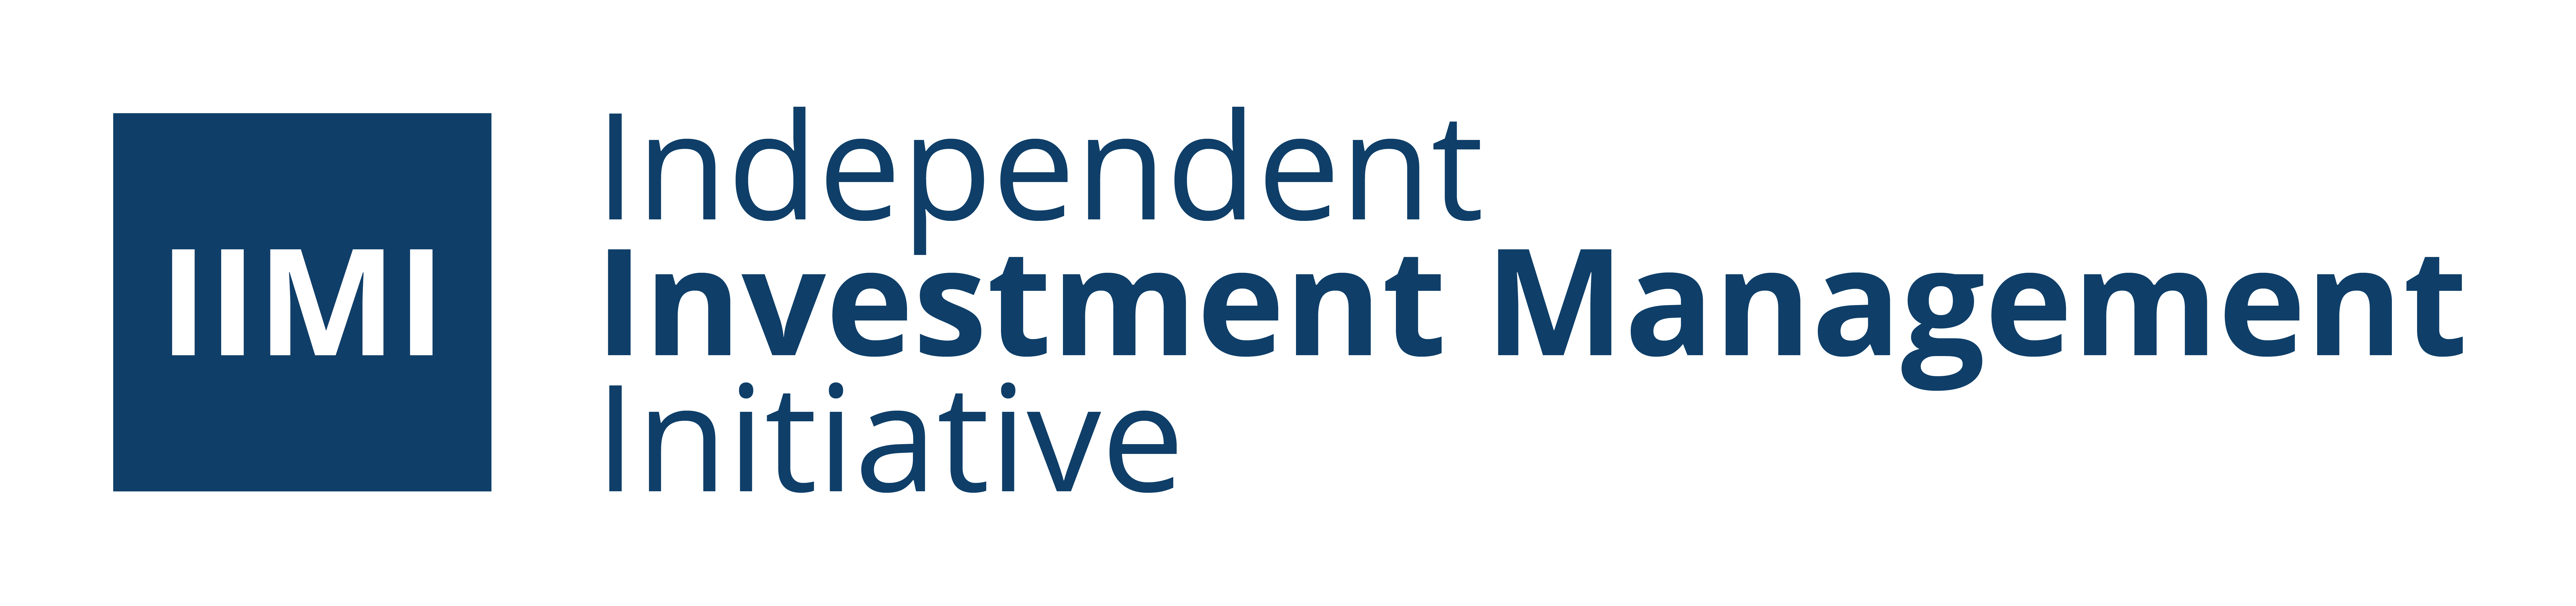 Independent Investment Management Initiative